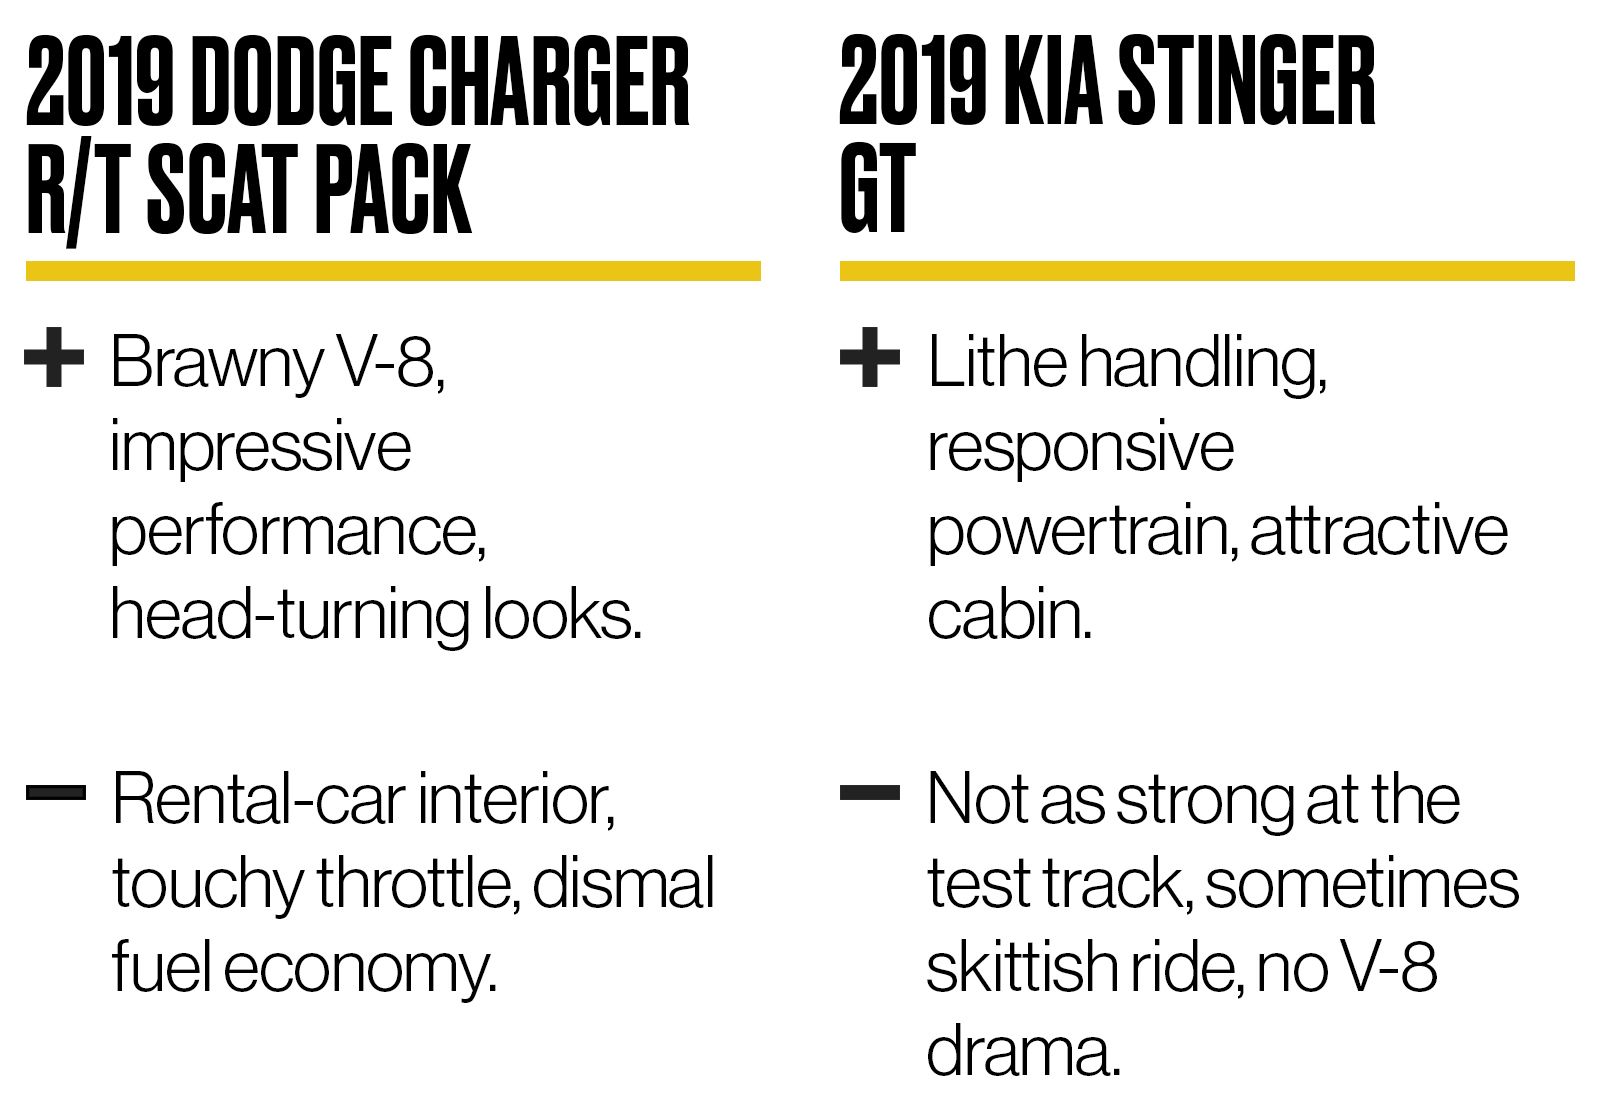 2019 Dodge Charger R/T Scat Pack vs. 2019 Kia Stinger GT